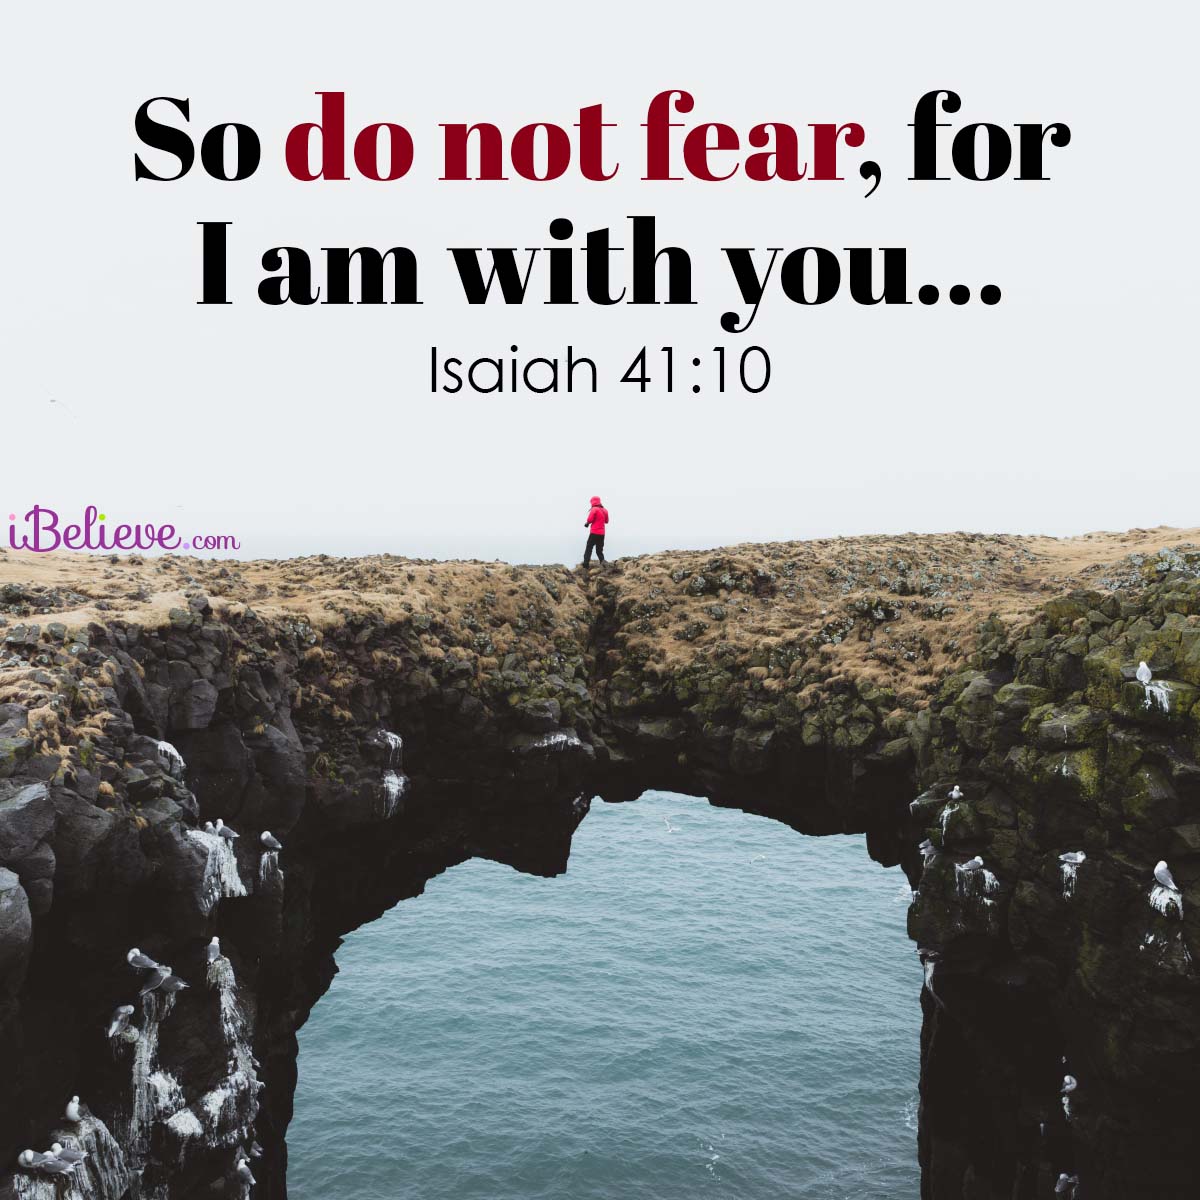 Isaiah 41:10, inspirational image